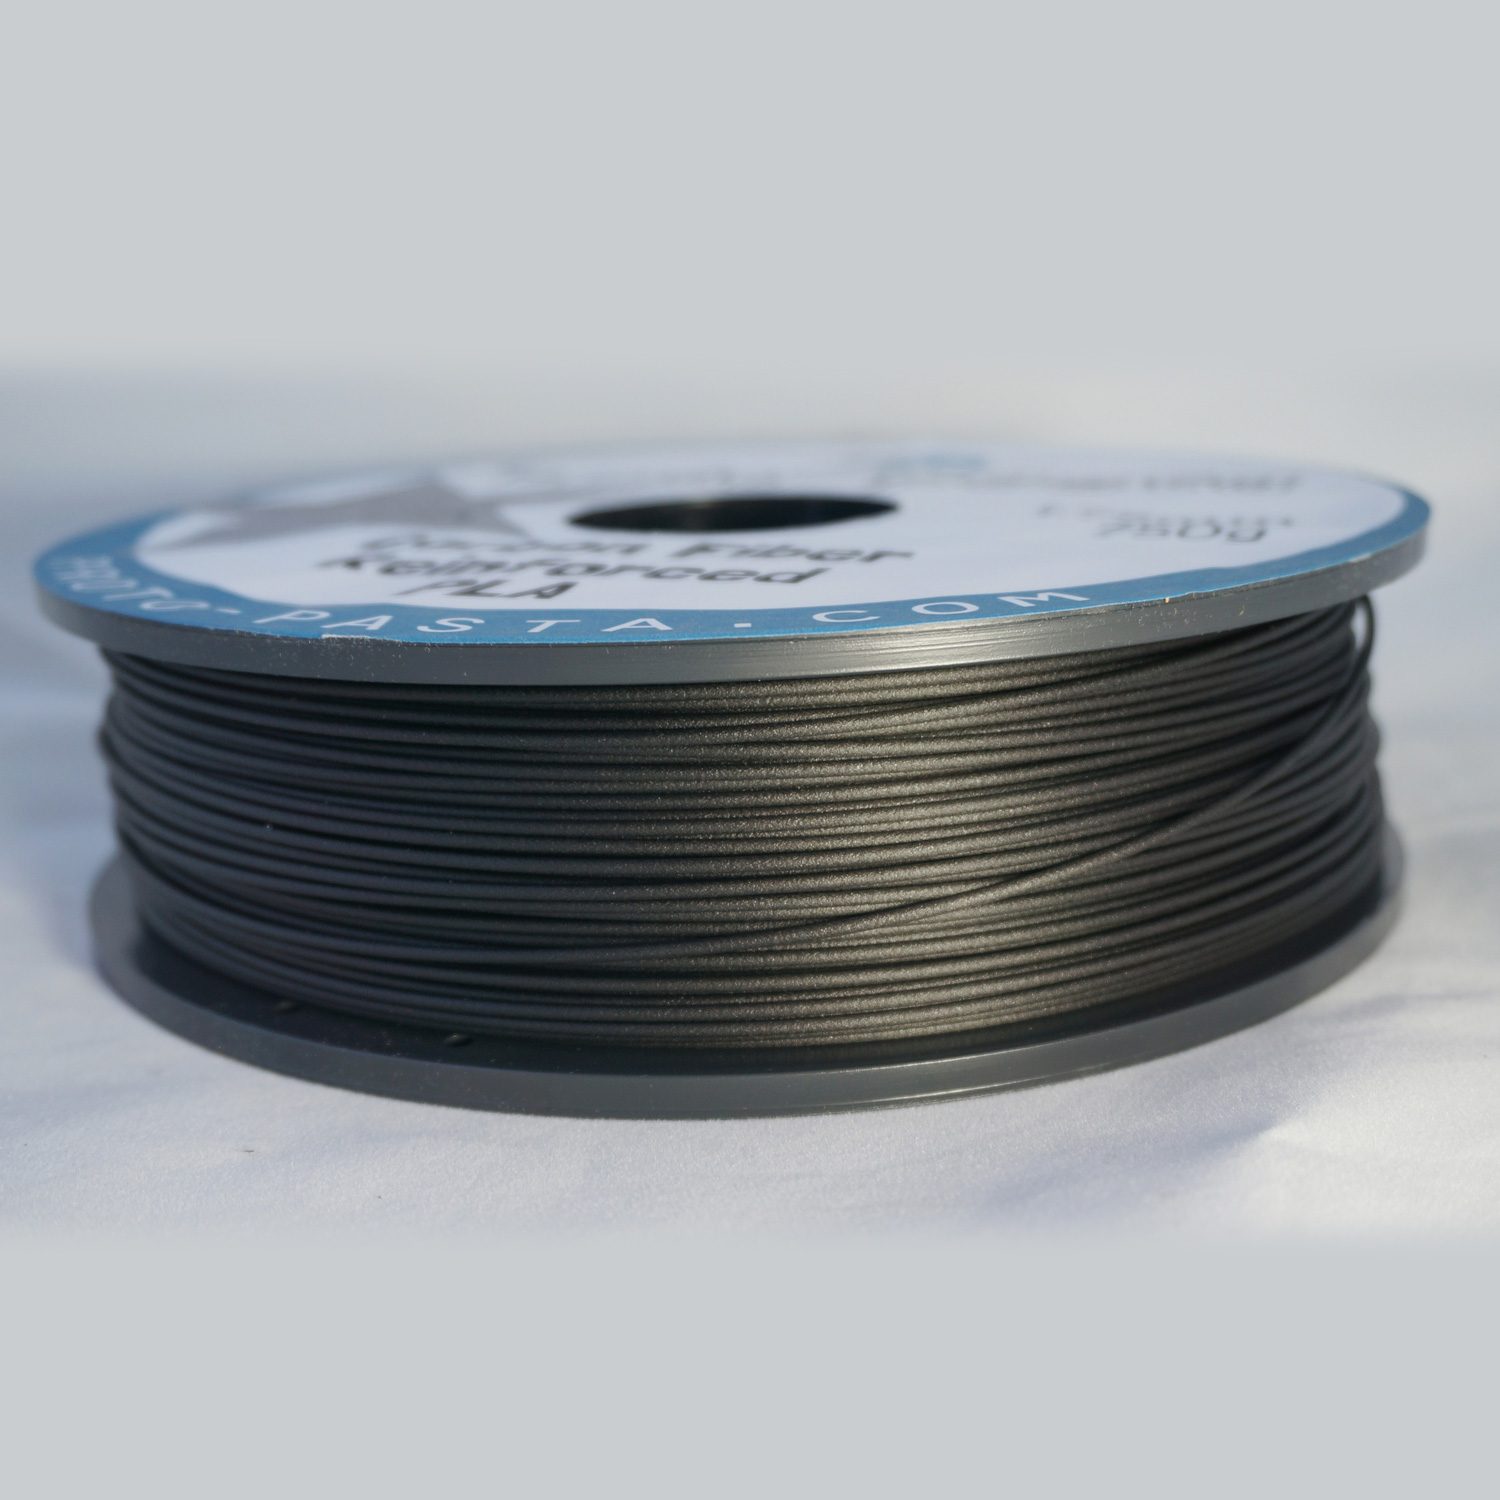 Proto-Pasta Carbon Fiber Strong PLA Filament for 3D Printing